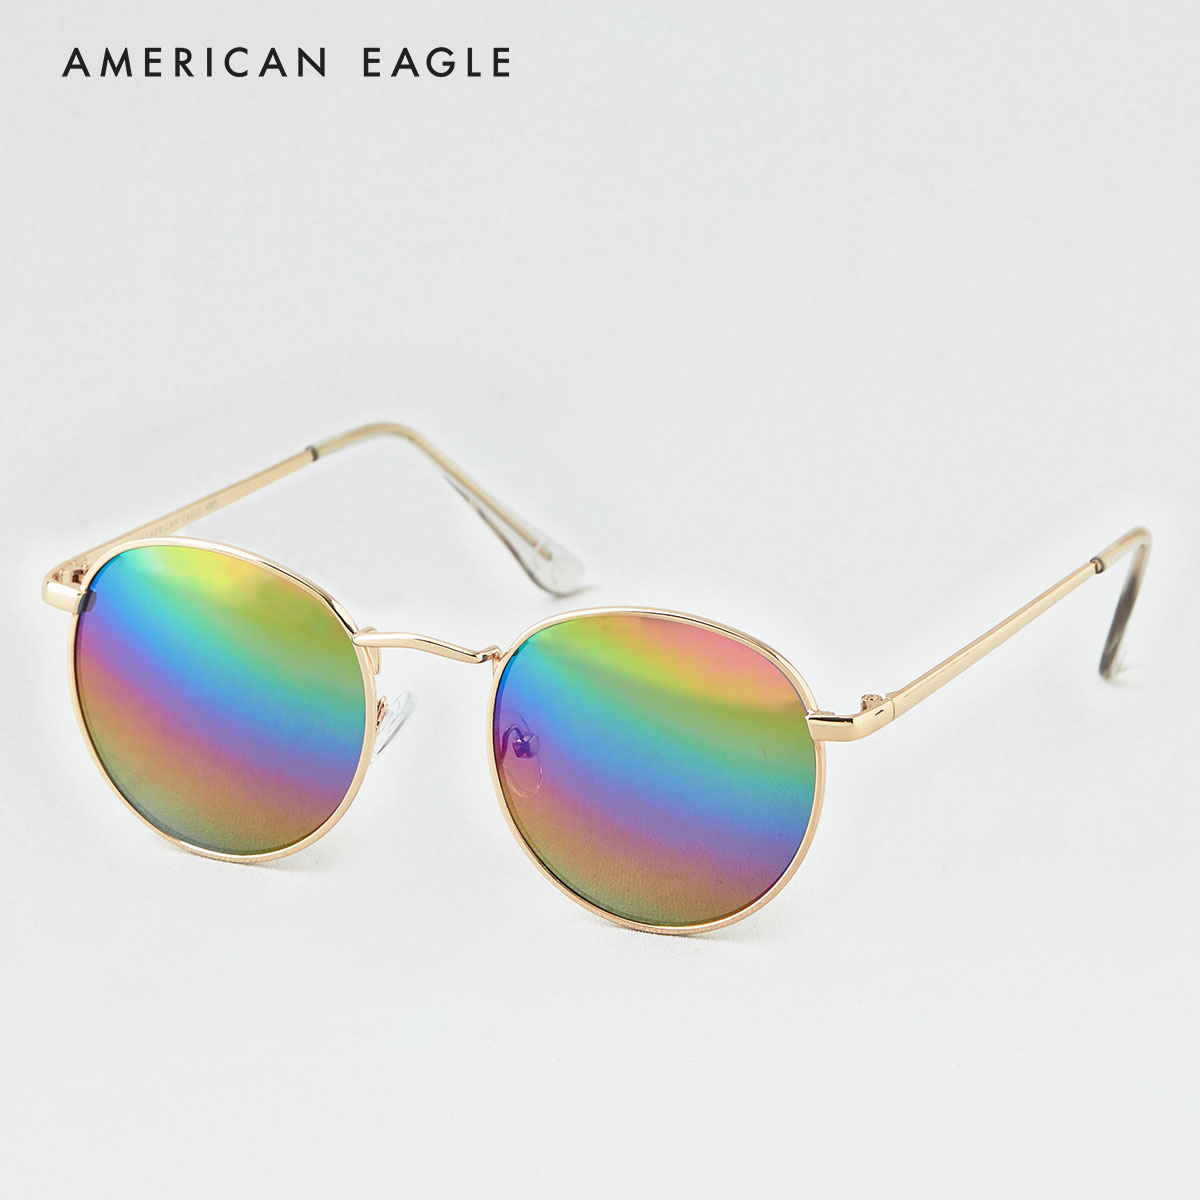 American Eagle Metal Round Sunglasses แว่นตา ผู้หญิง แฟชั่น(048-4869-900)